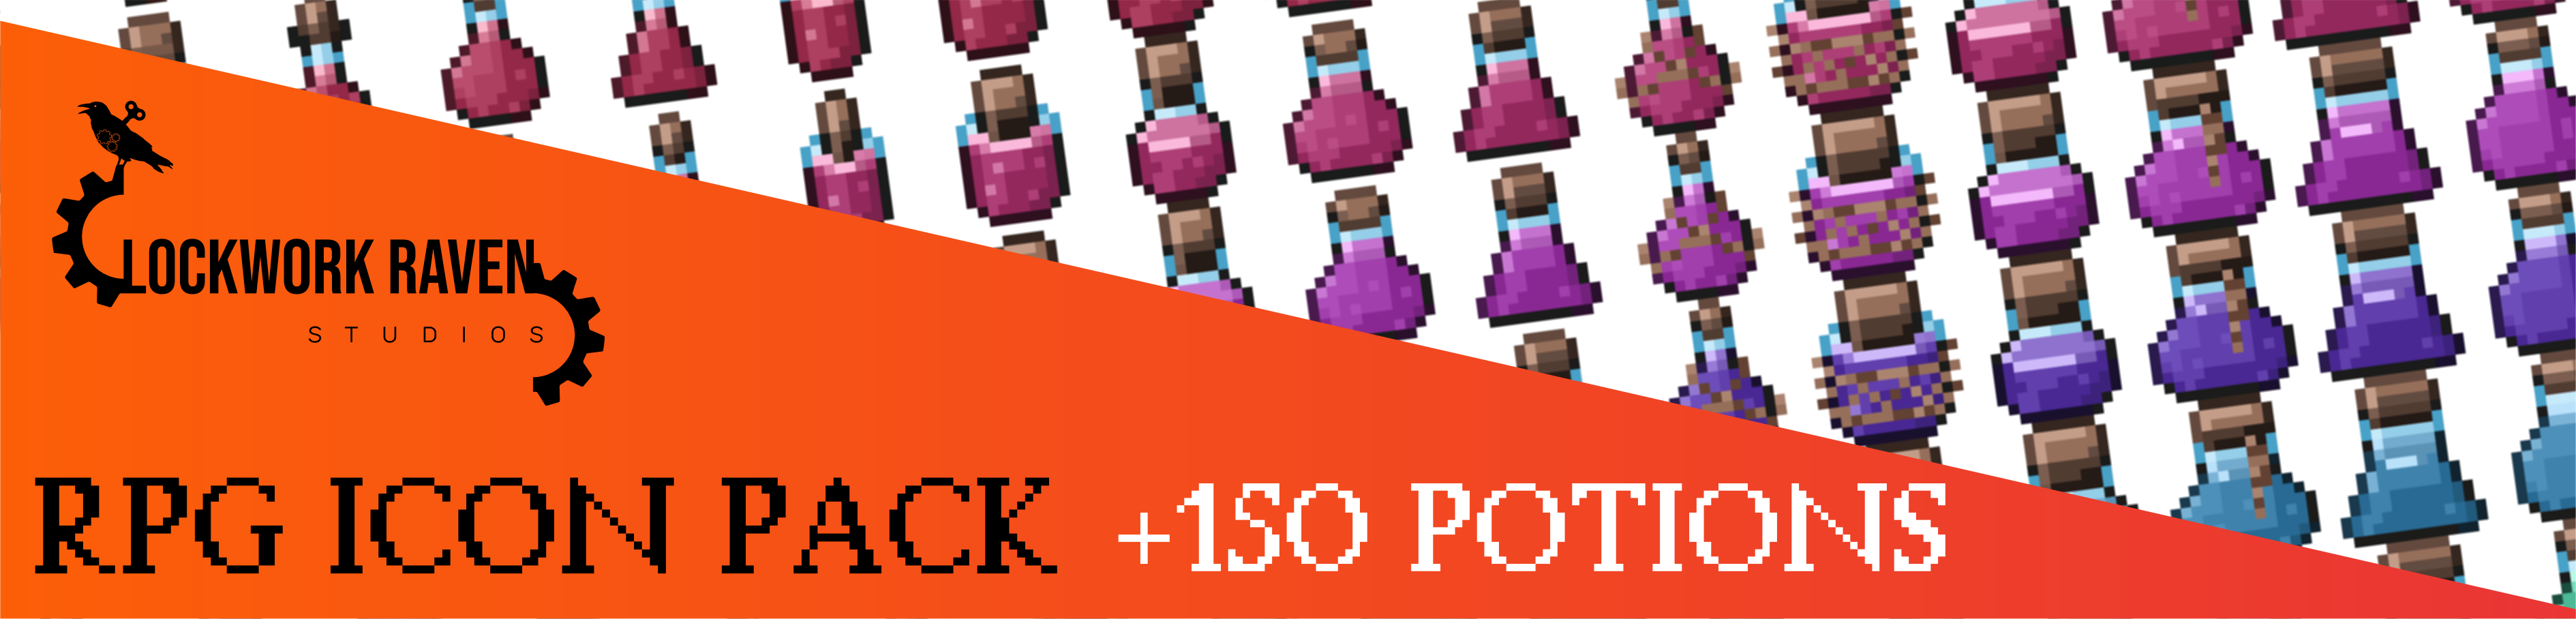 RPG Icon Pack - 150+ Potions - Clockwork Raven Studios